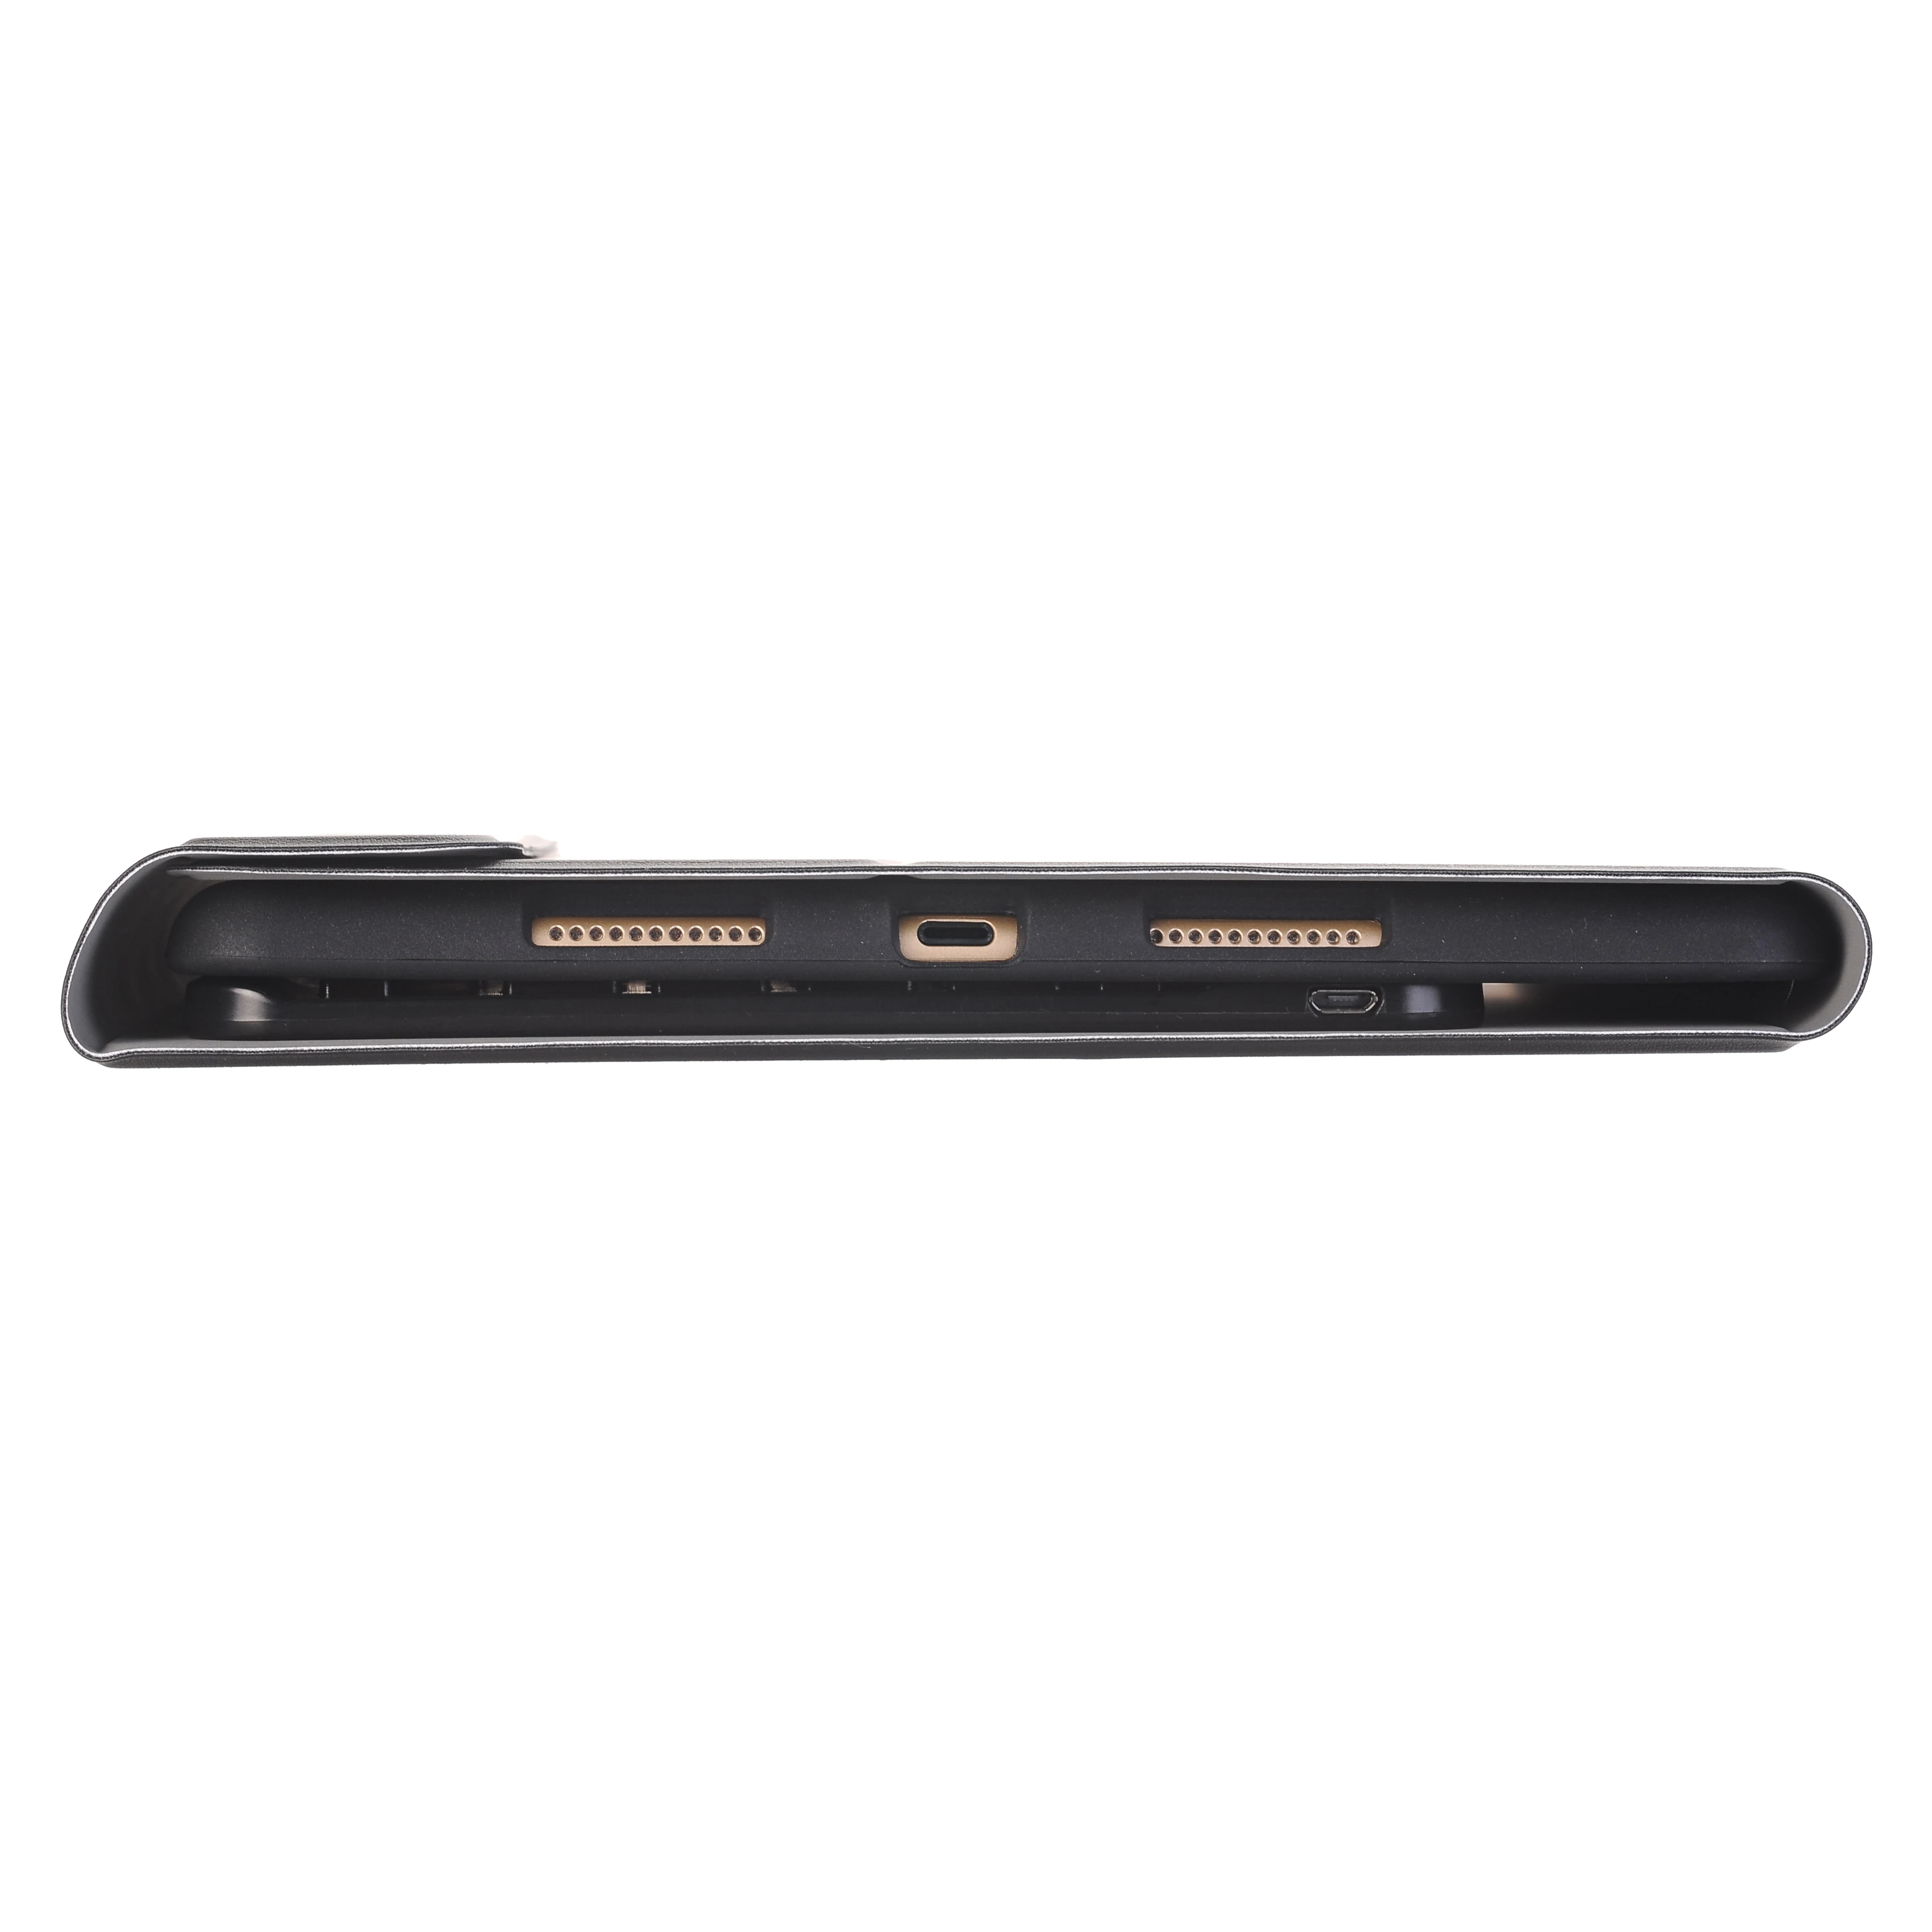 Чехол для iPad Pro 10,5 A1701 A1709 съемный WiFi Bluetooth клавиатура кожаный чехол для iPad Pro 10,5 дюймов Funda+ карандаш держатель